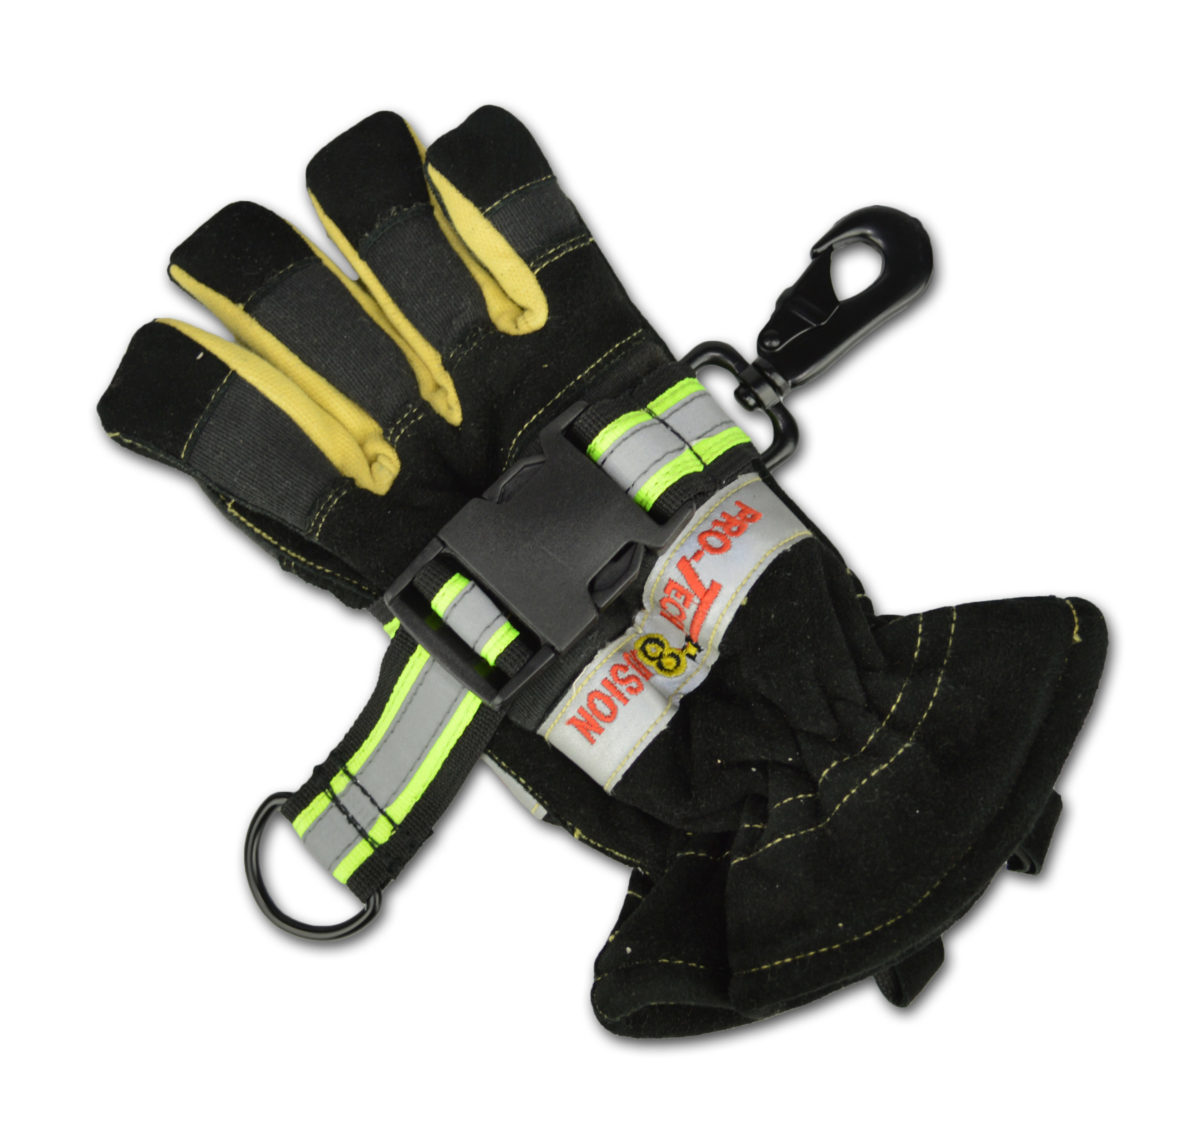 heavy duty adjustable reflective firefighter fire glove strap holder